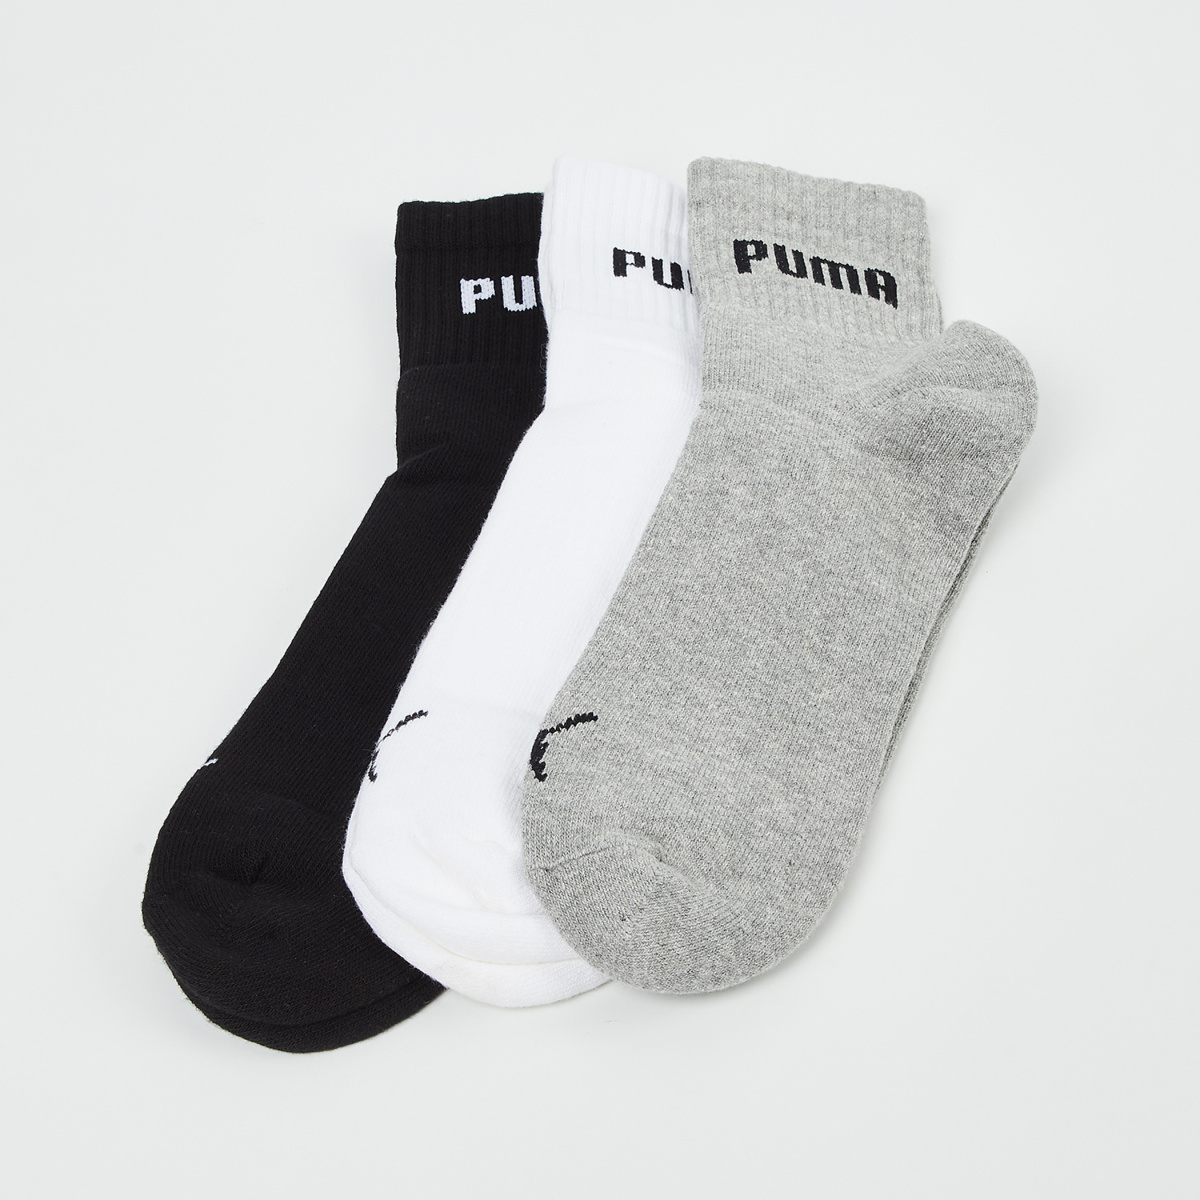 PUMA Men Ankle Length Socks - Set of 3